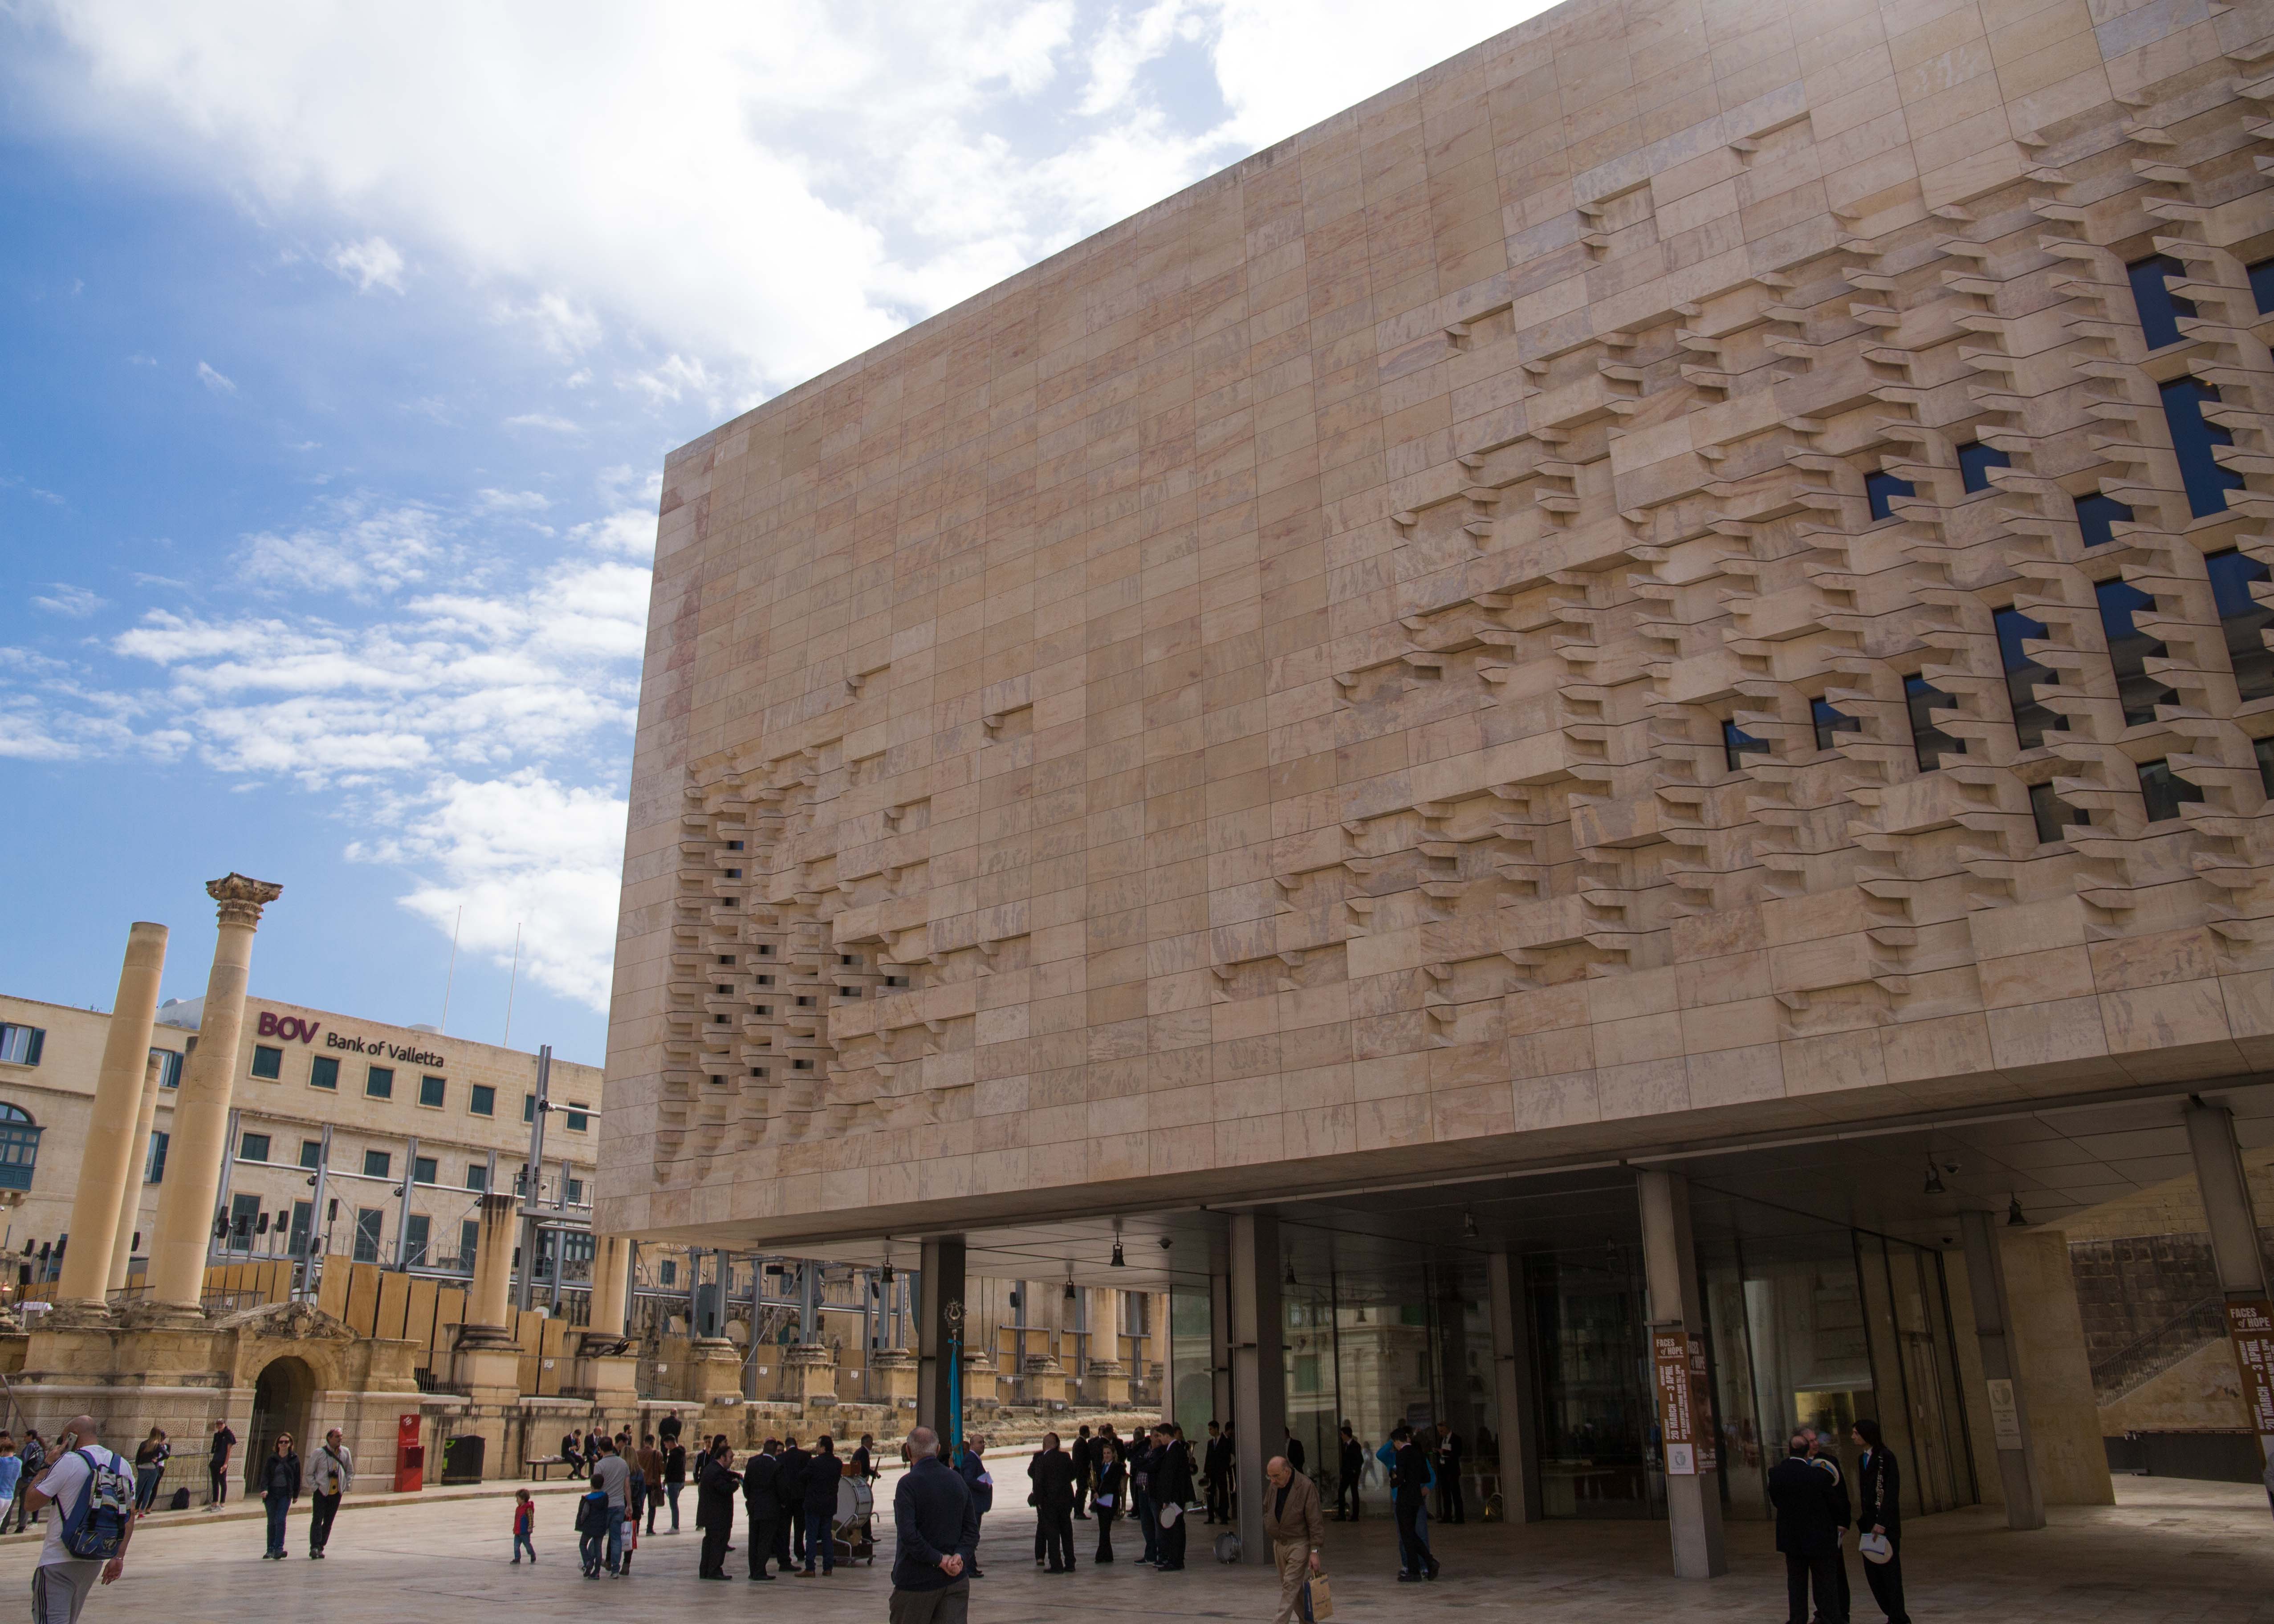 Where to visit in Valletta? Parliament of Malta